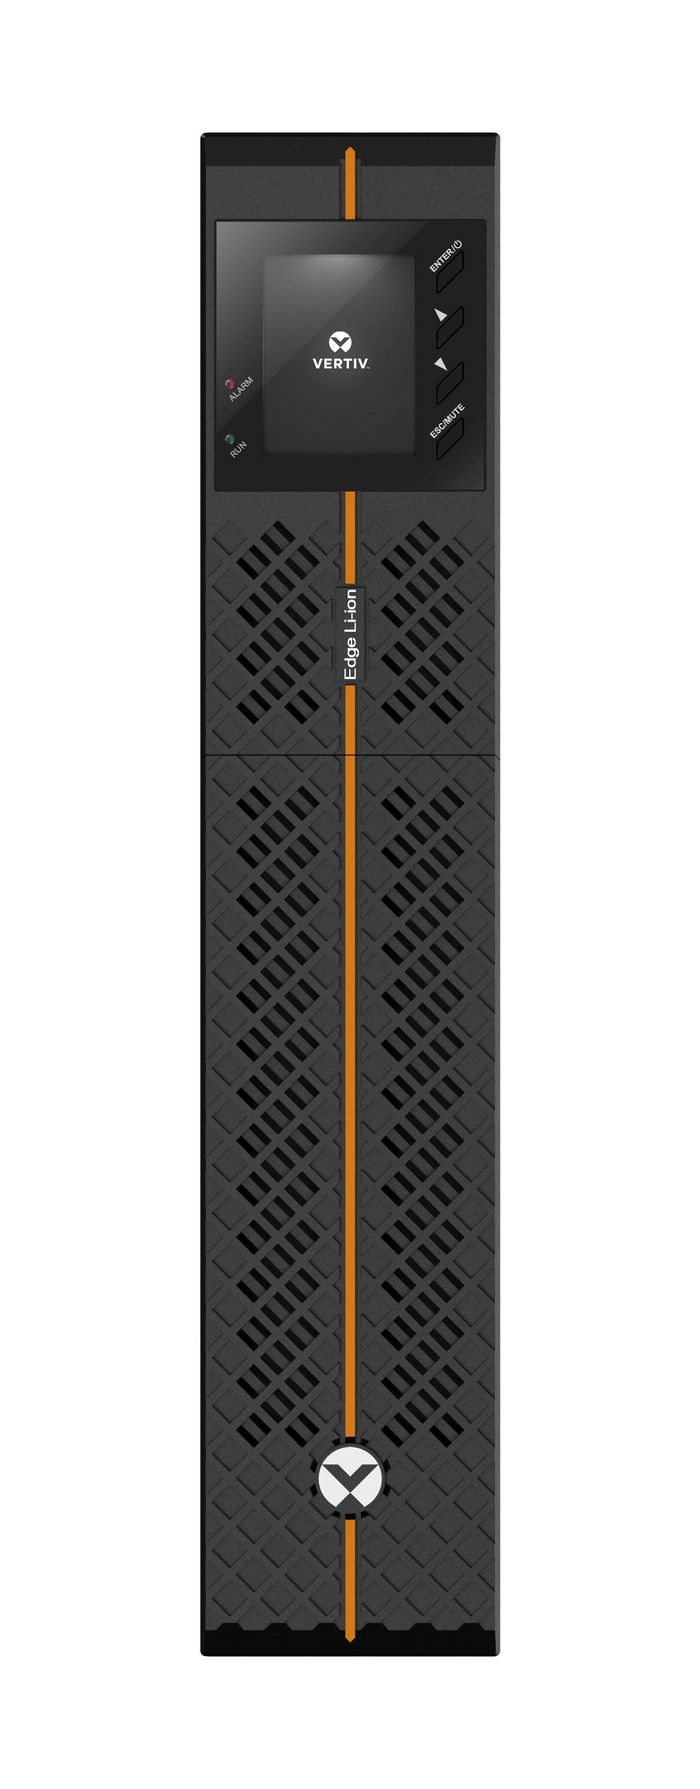 Vertiv Edge Lithium Ion UPS 3000VA 230V Rack/Tower with Li-ion batteries - W126359515